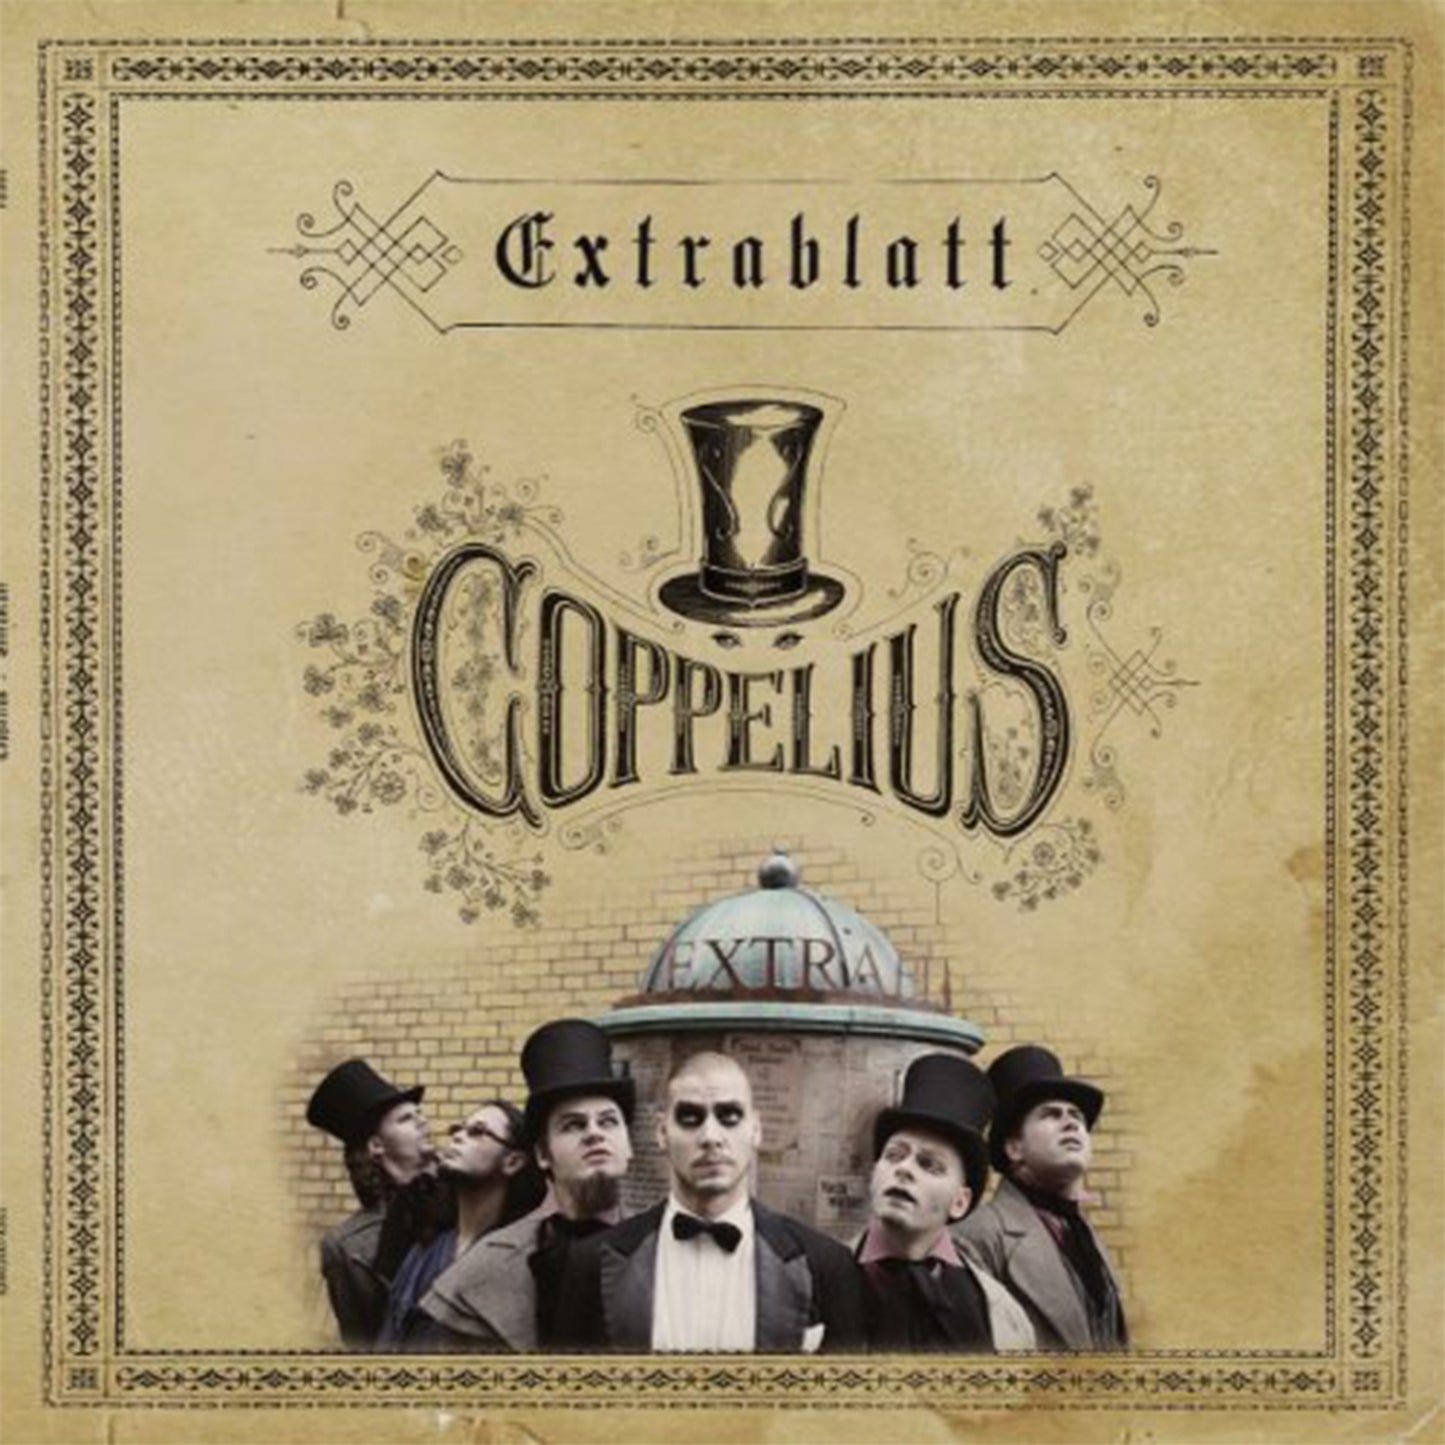 COPPELIUS - Extrablatt Vinyl